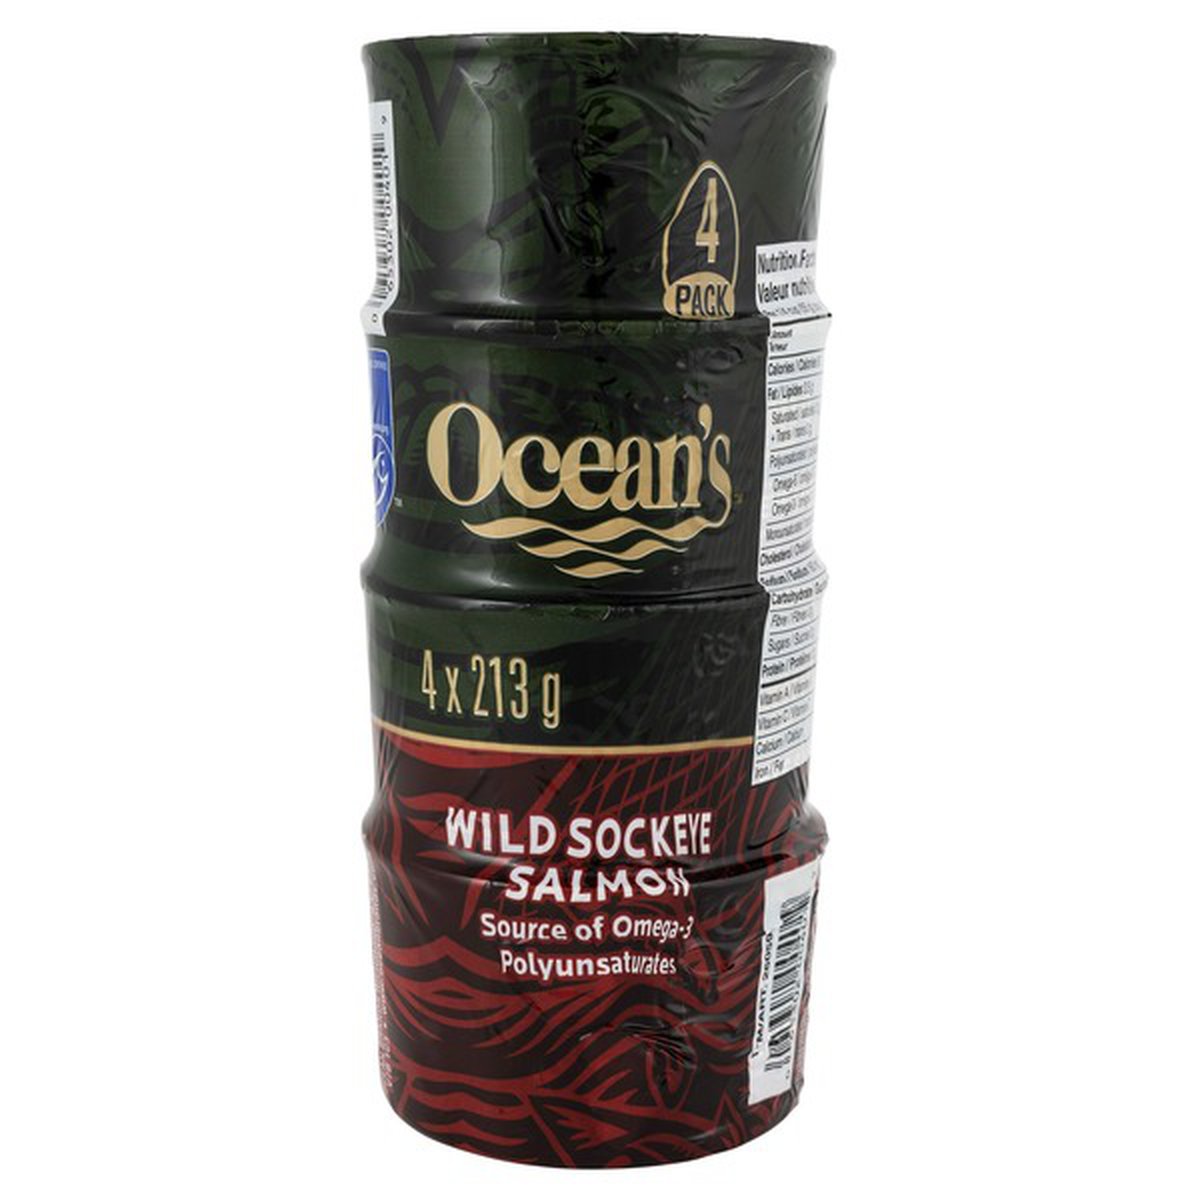 Ocean's Wild Sockeye Salmon 4 x 213 g – Coastal Connection